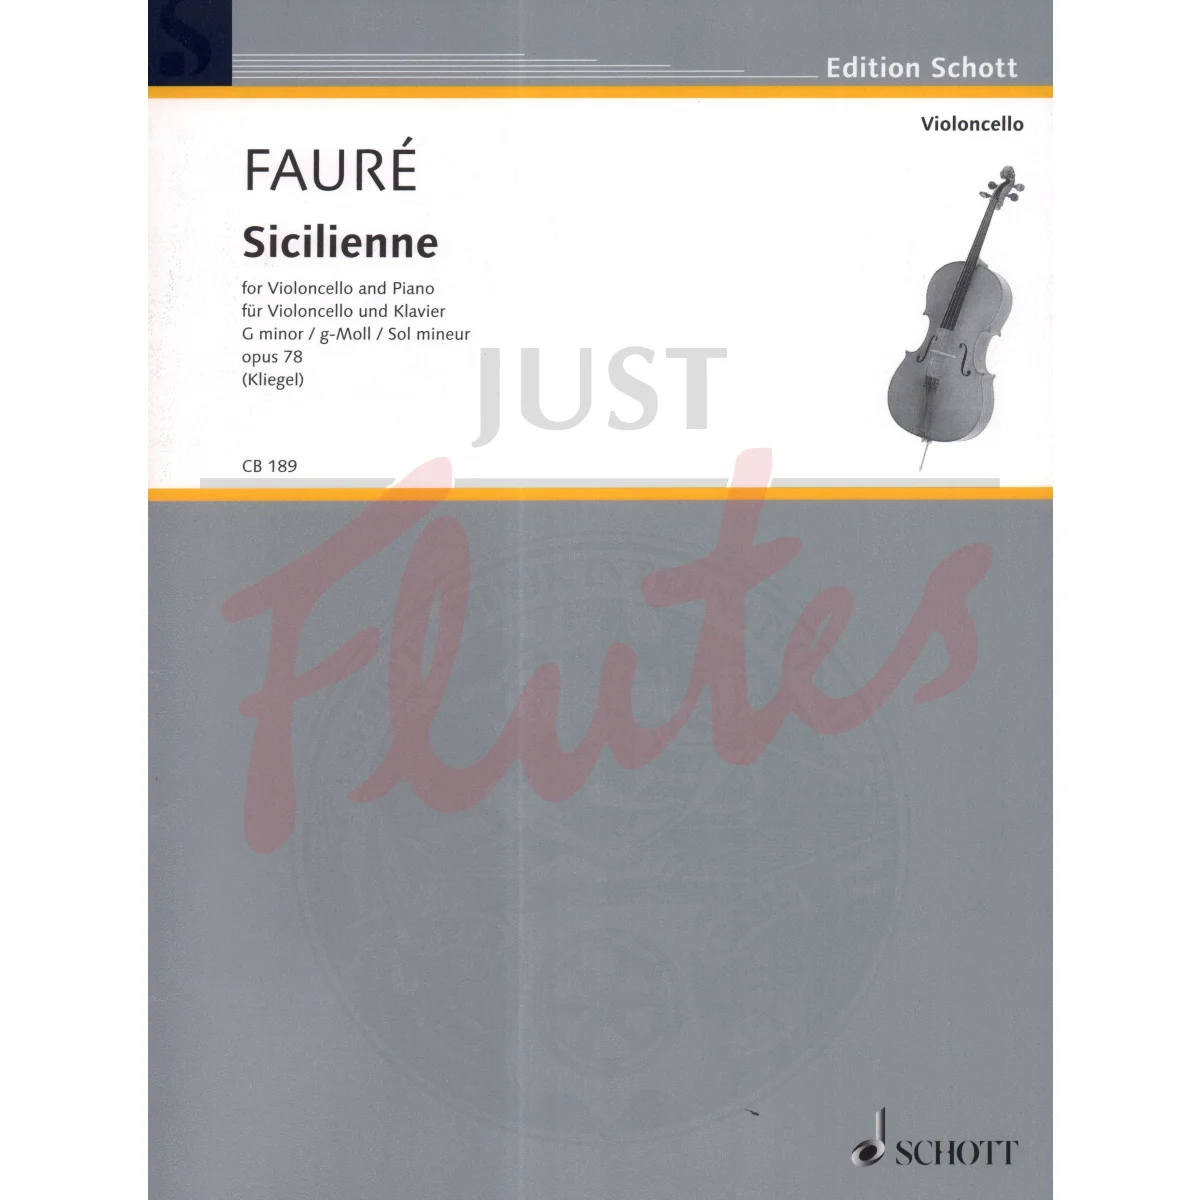 Sicilienne for Cello and Piano